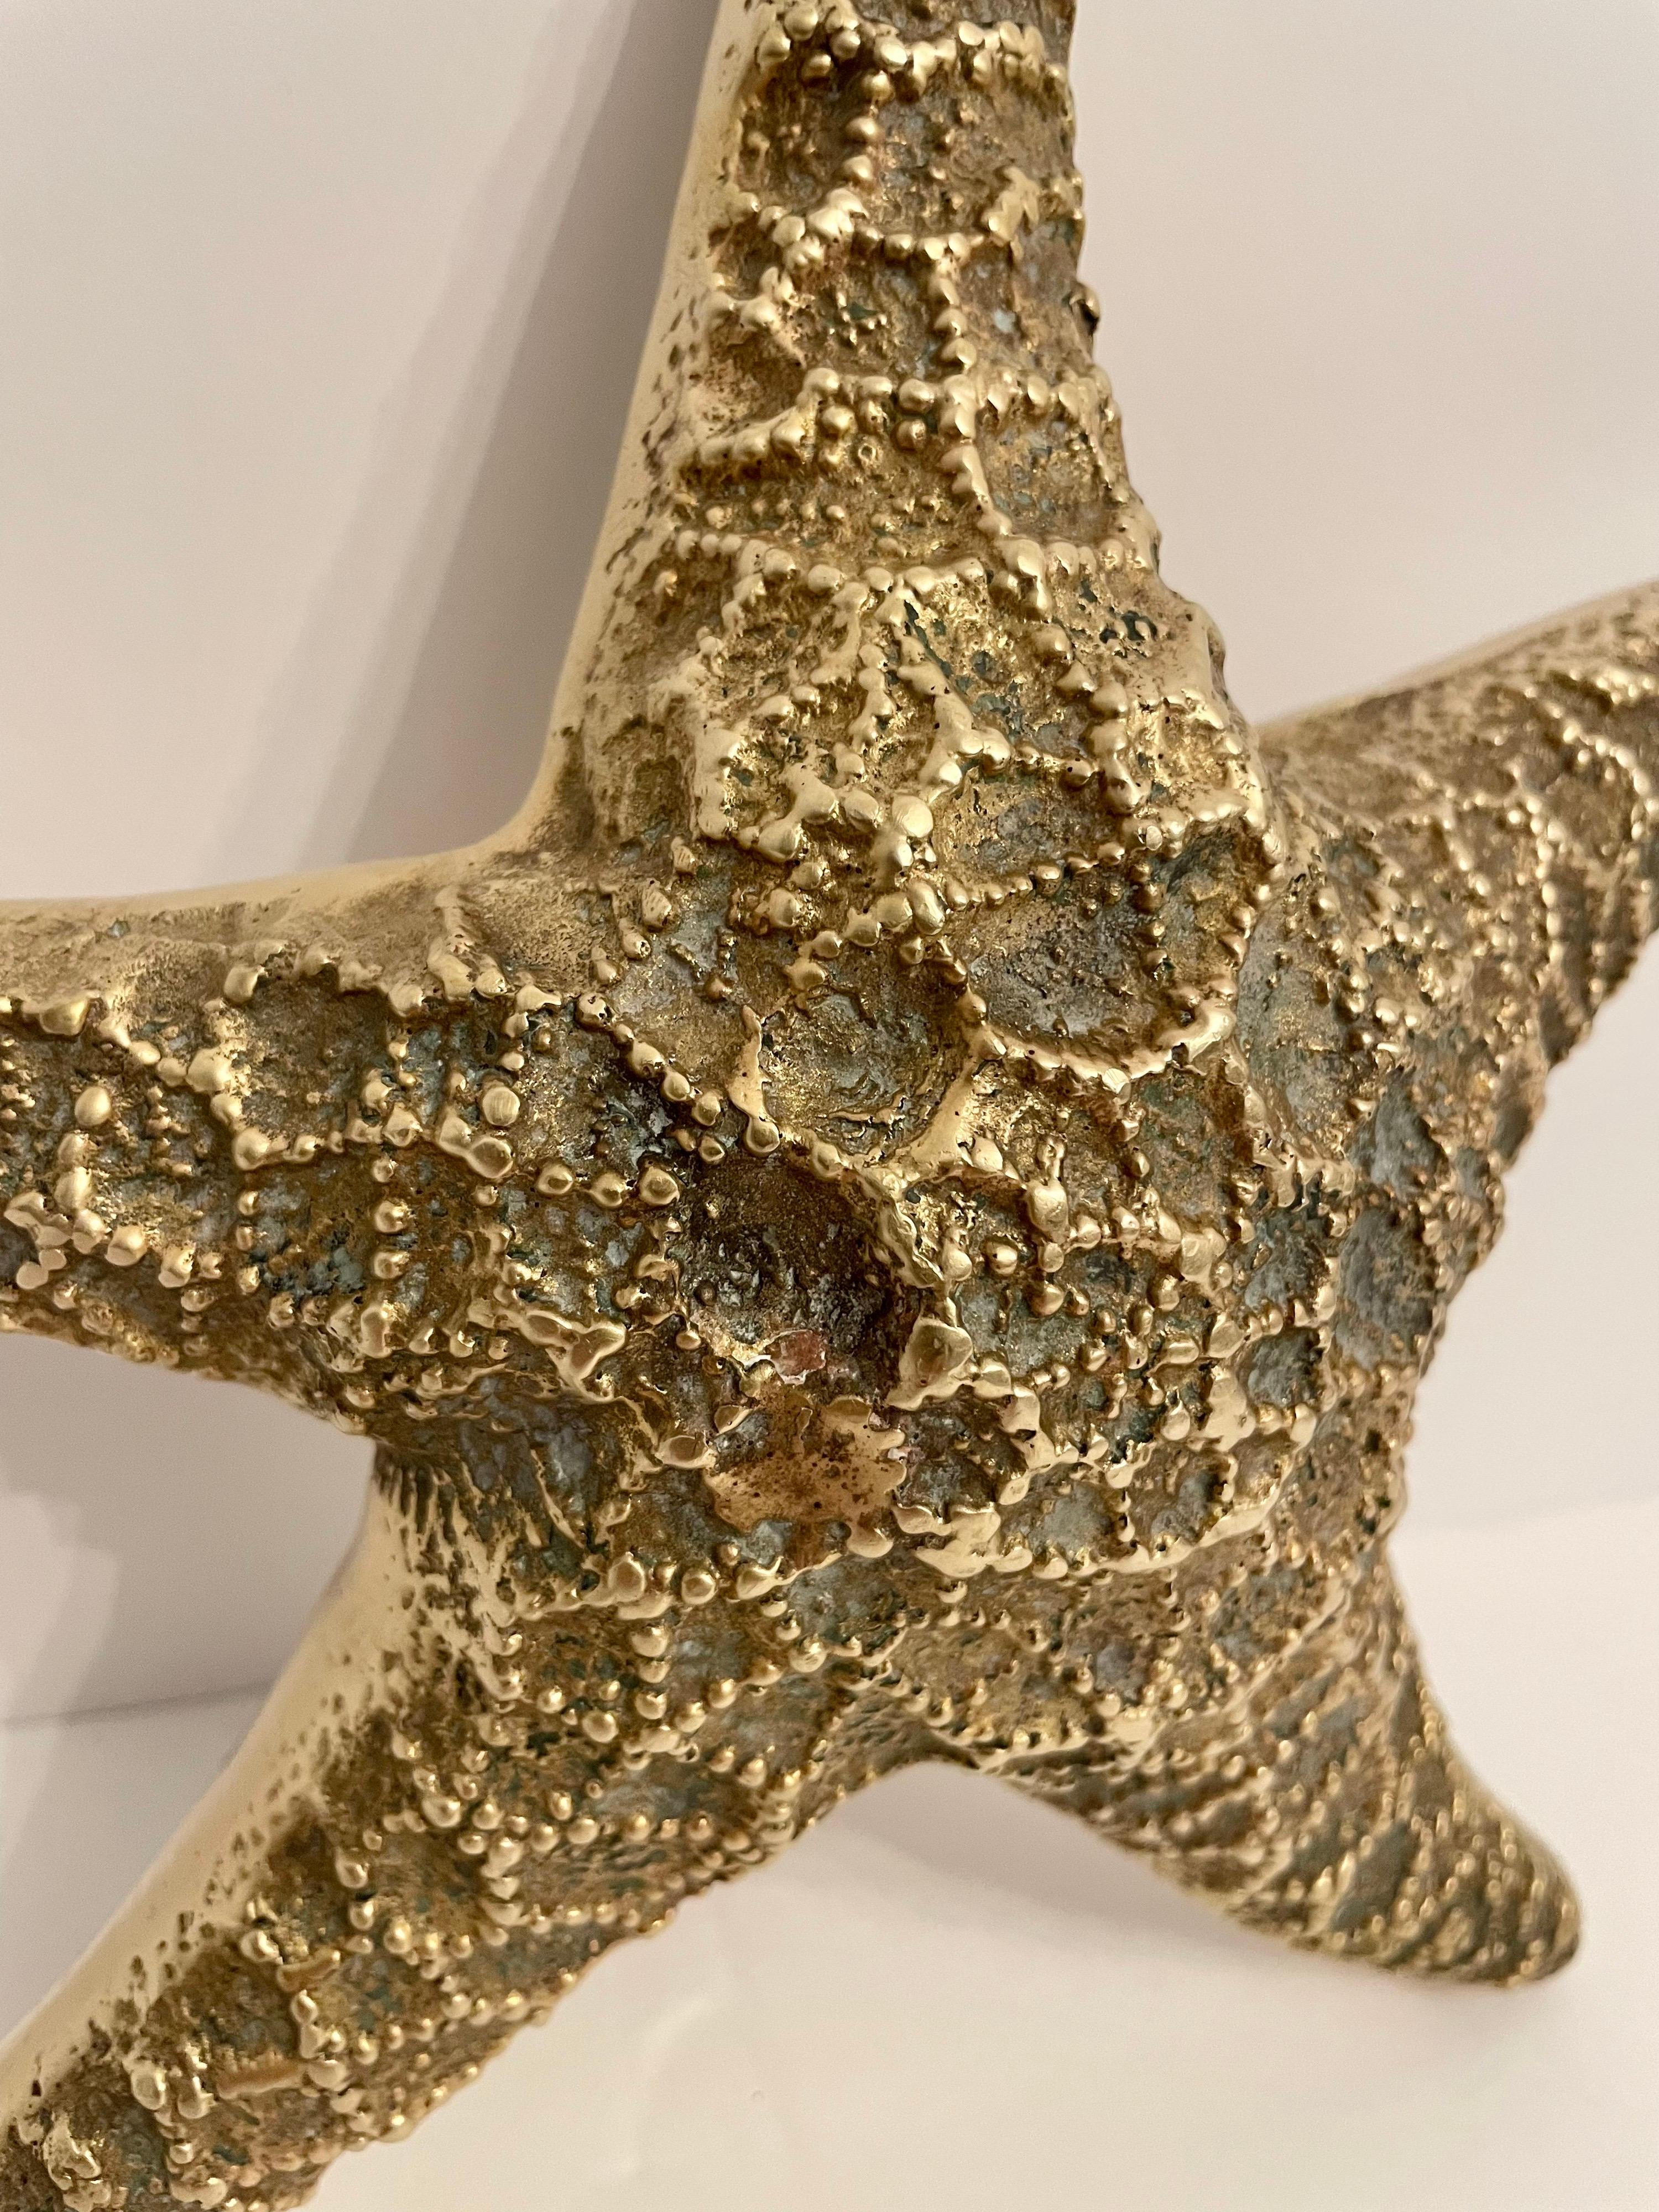 Cast Large Nautical Brass Starfish Paperweight